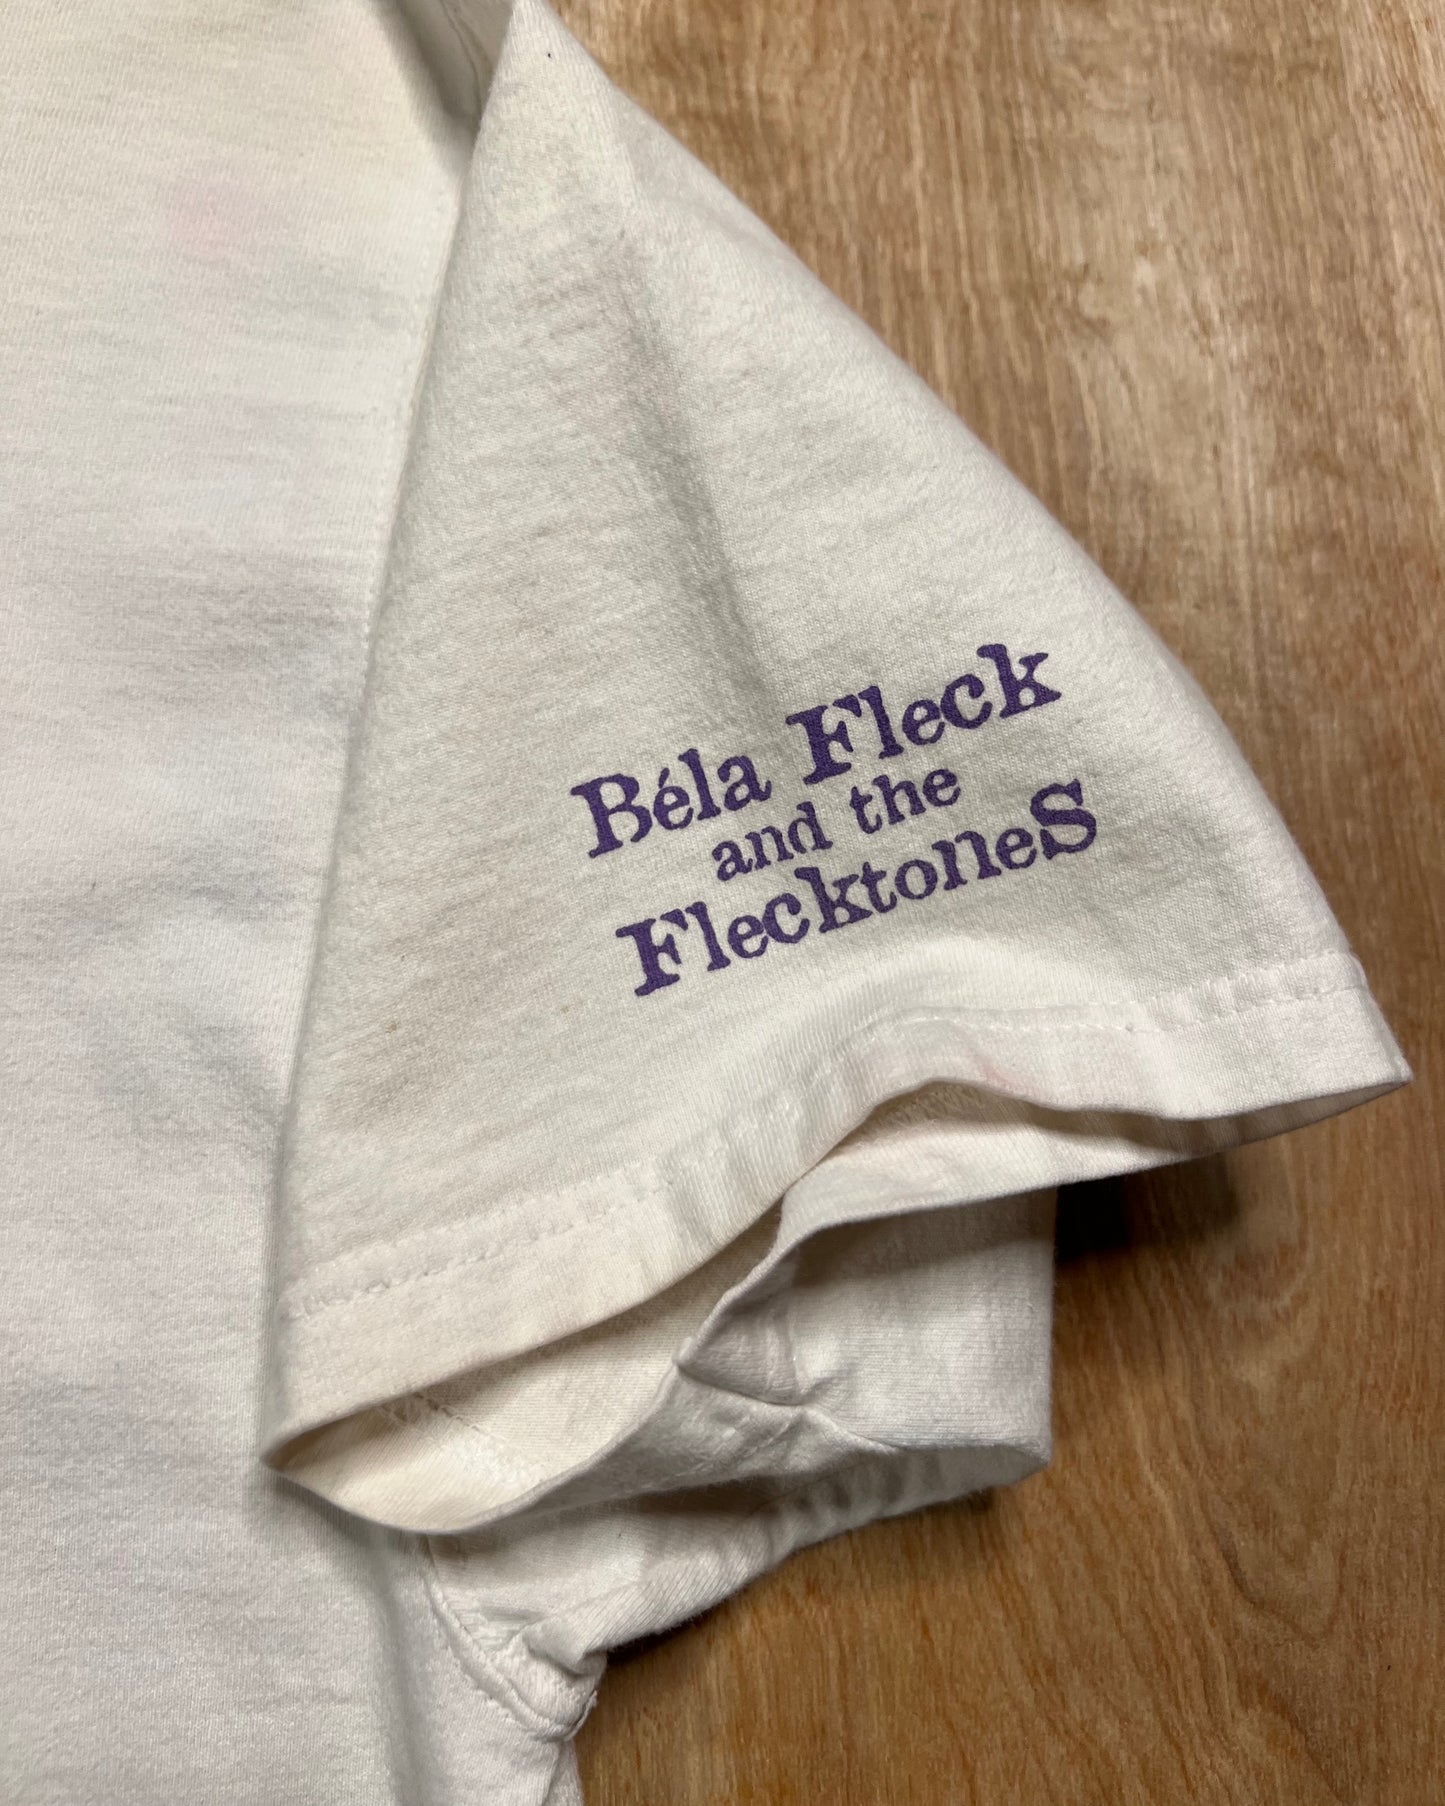 1990's Béla Fleck and the Flecktones "Left of Cool" Tour T-Shirt